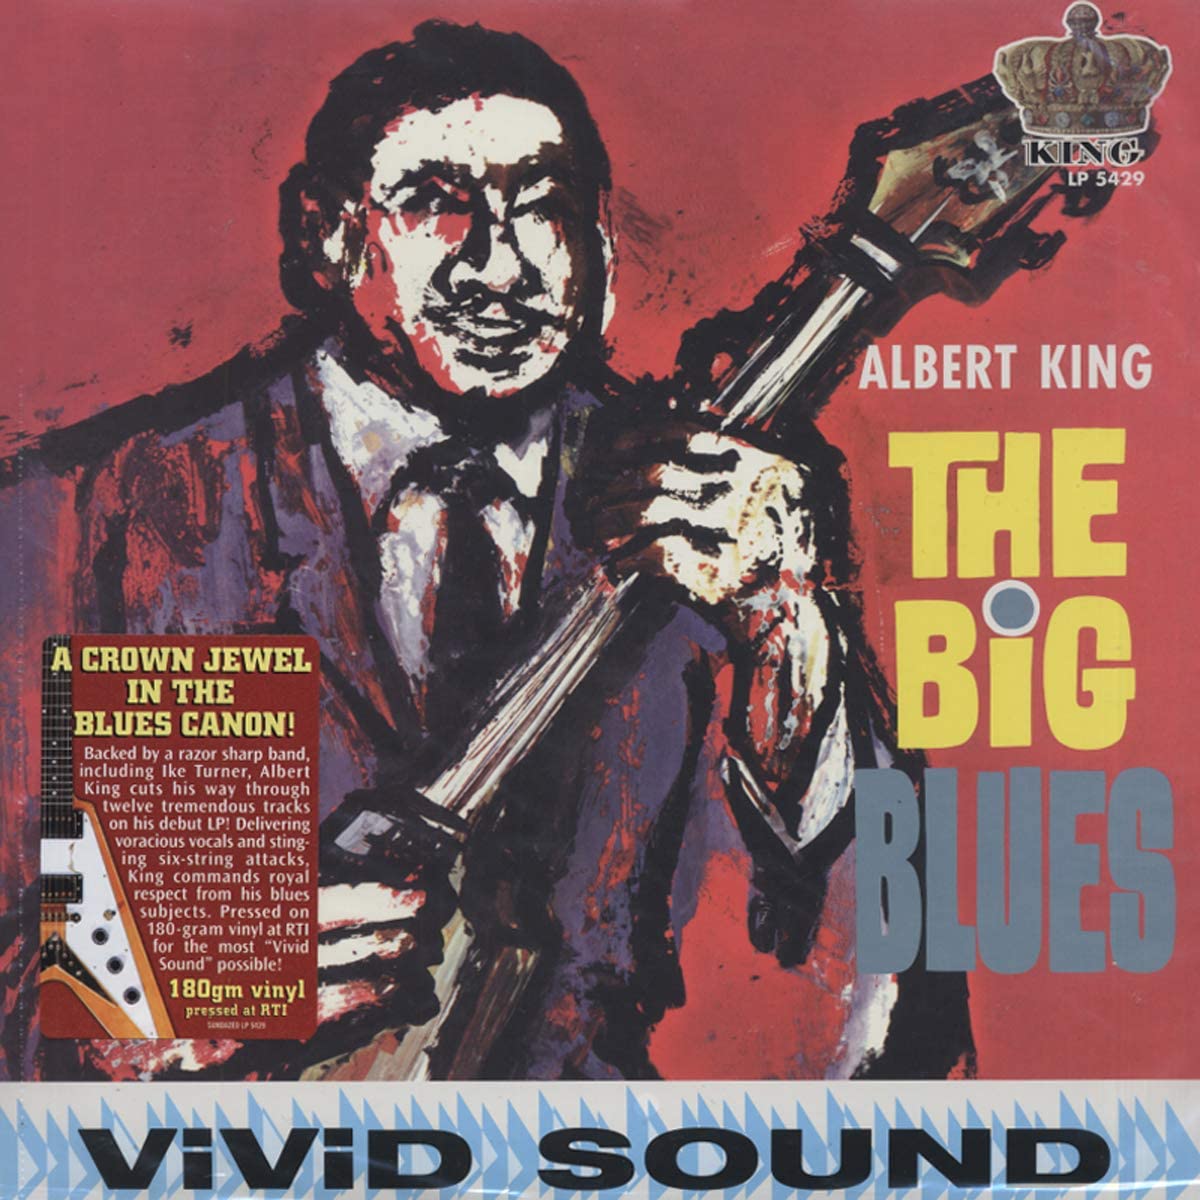 King, Albert/The Big Blues [LP]